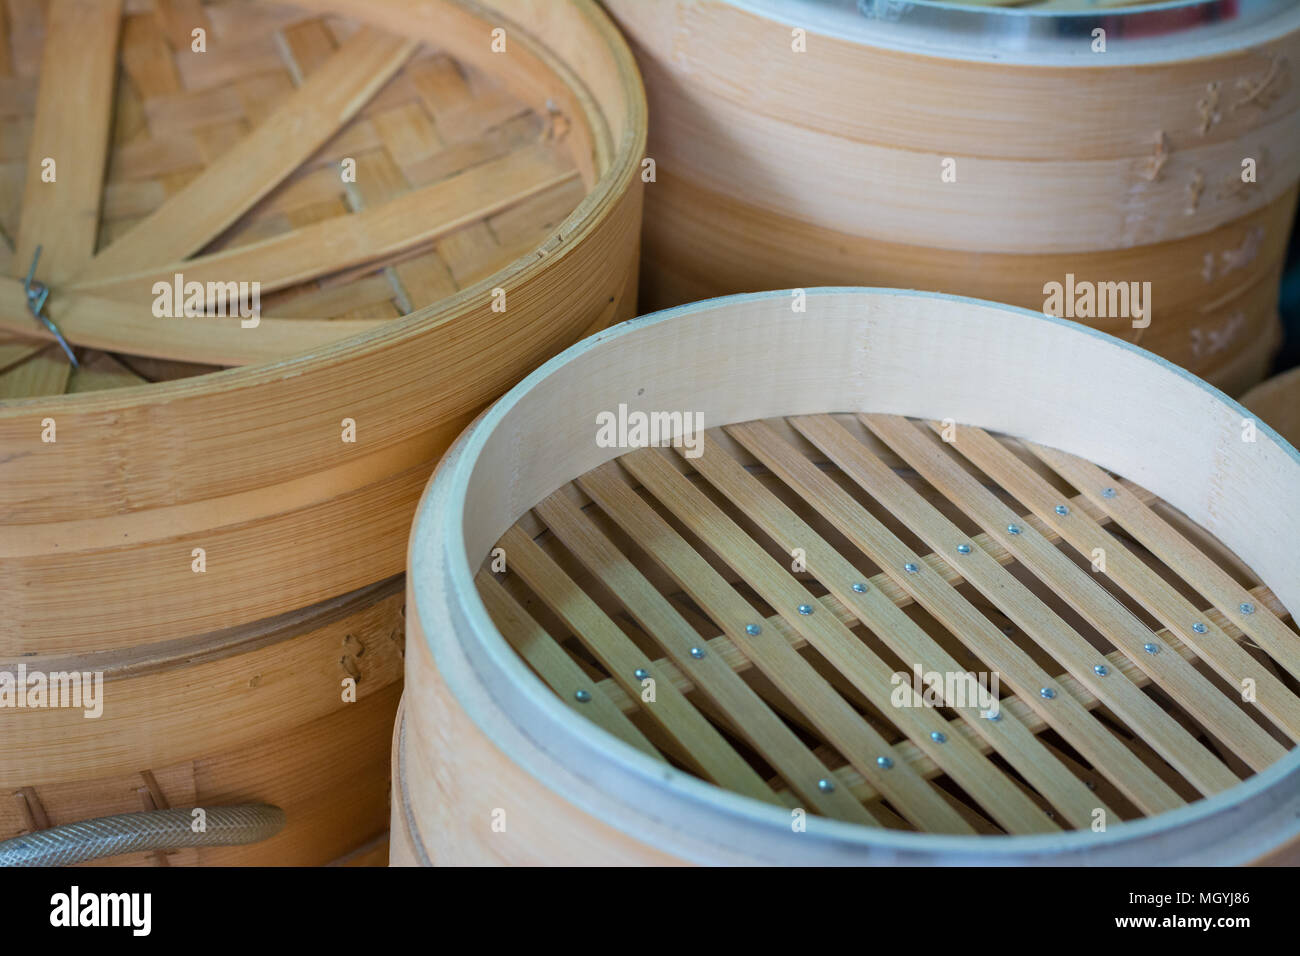 dim sum in bamboo steamer, chinese cuisine Stock Photo